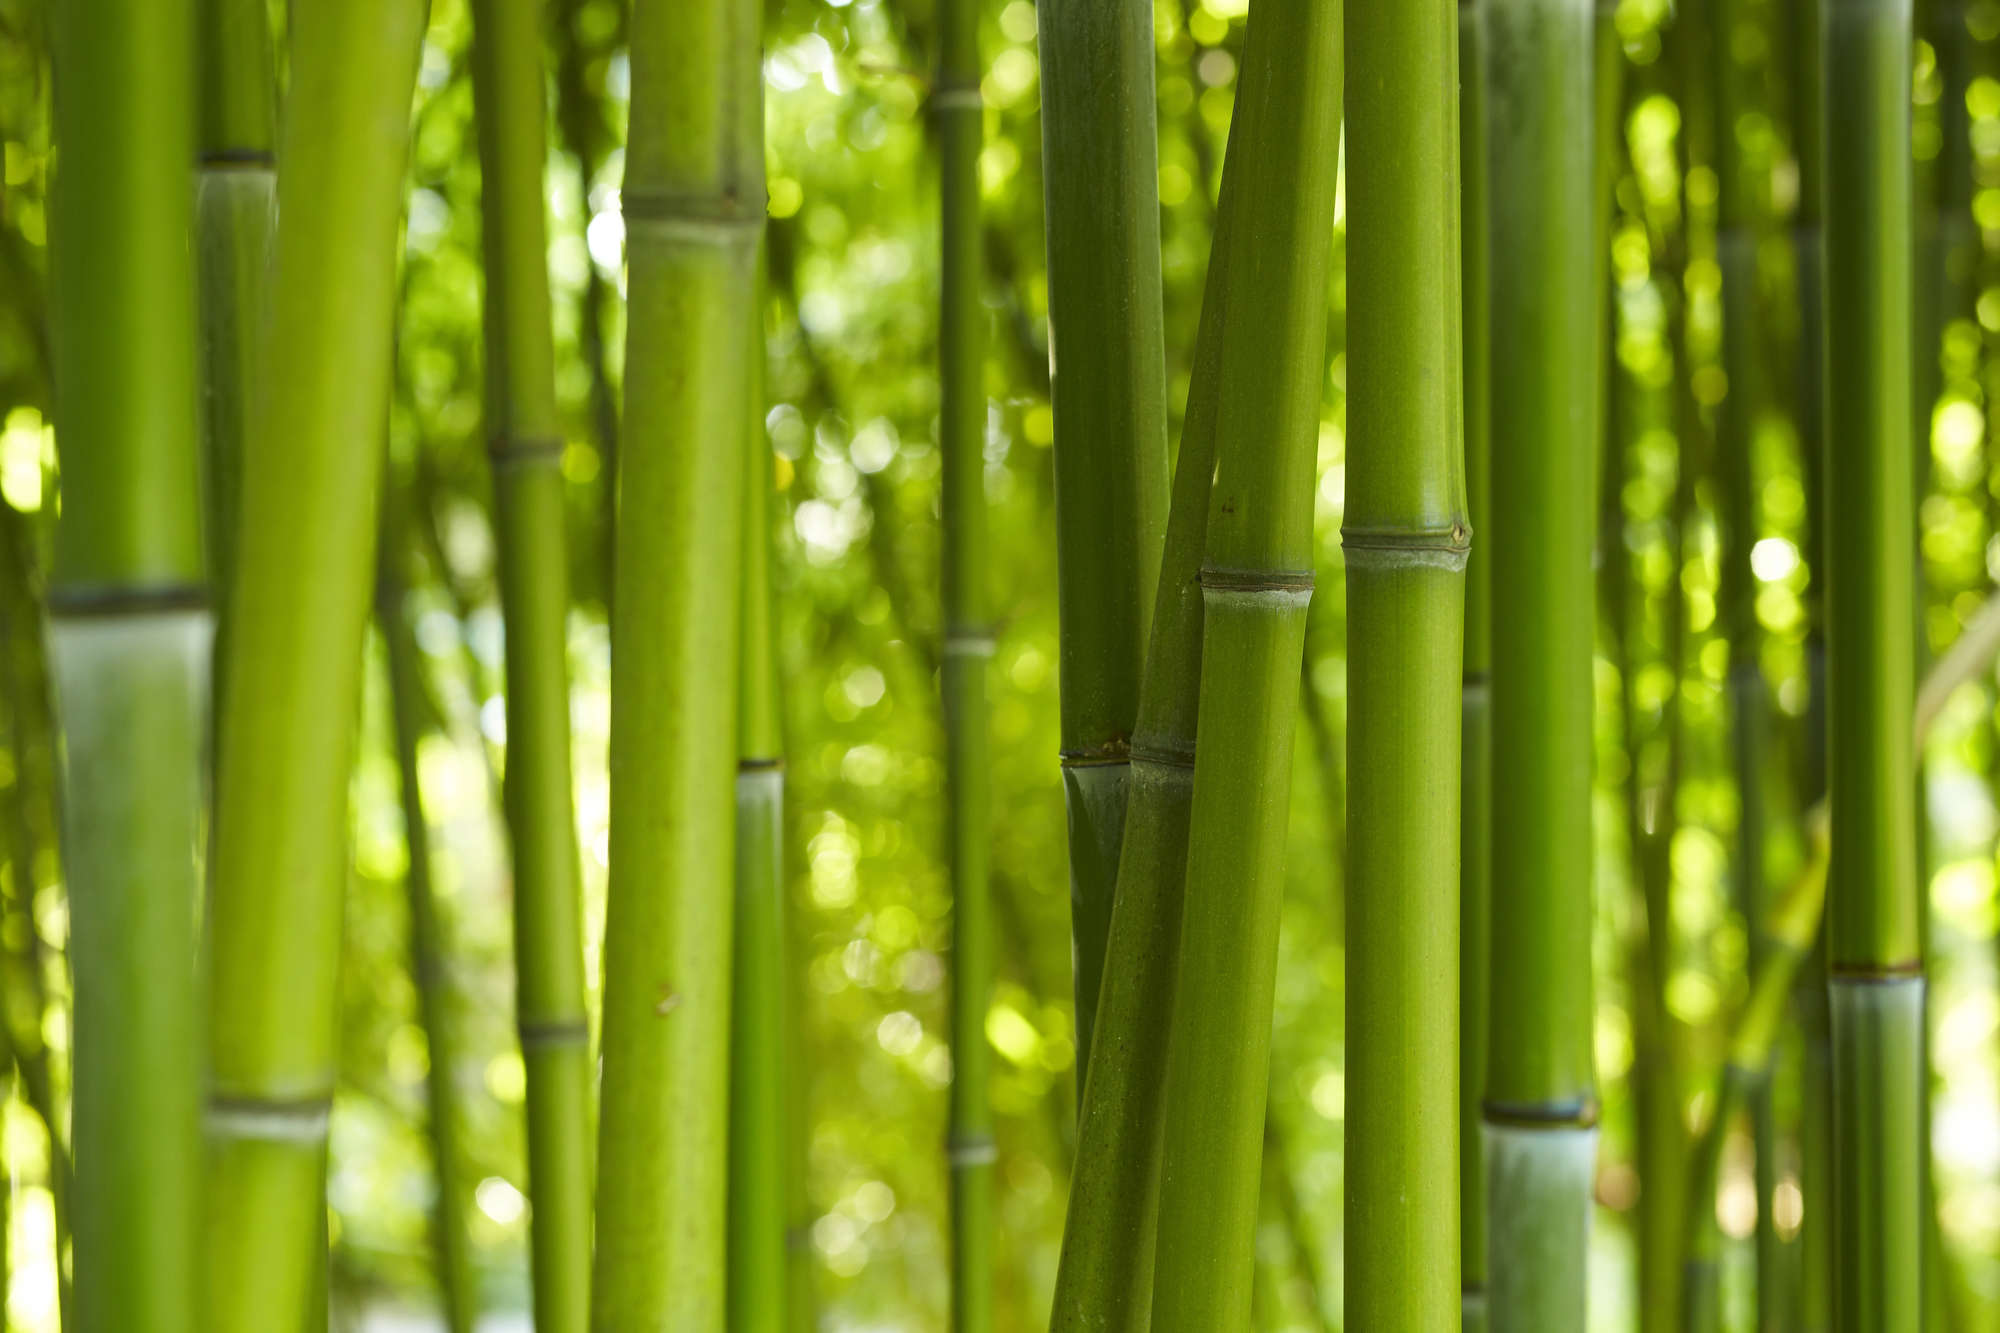             Natuurbehang bamboe close-up op structuurvlies
        